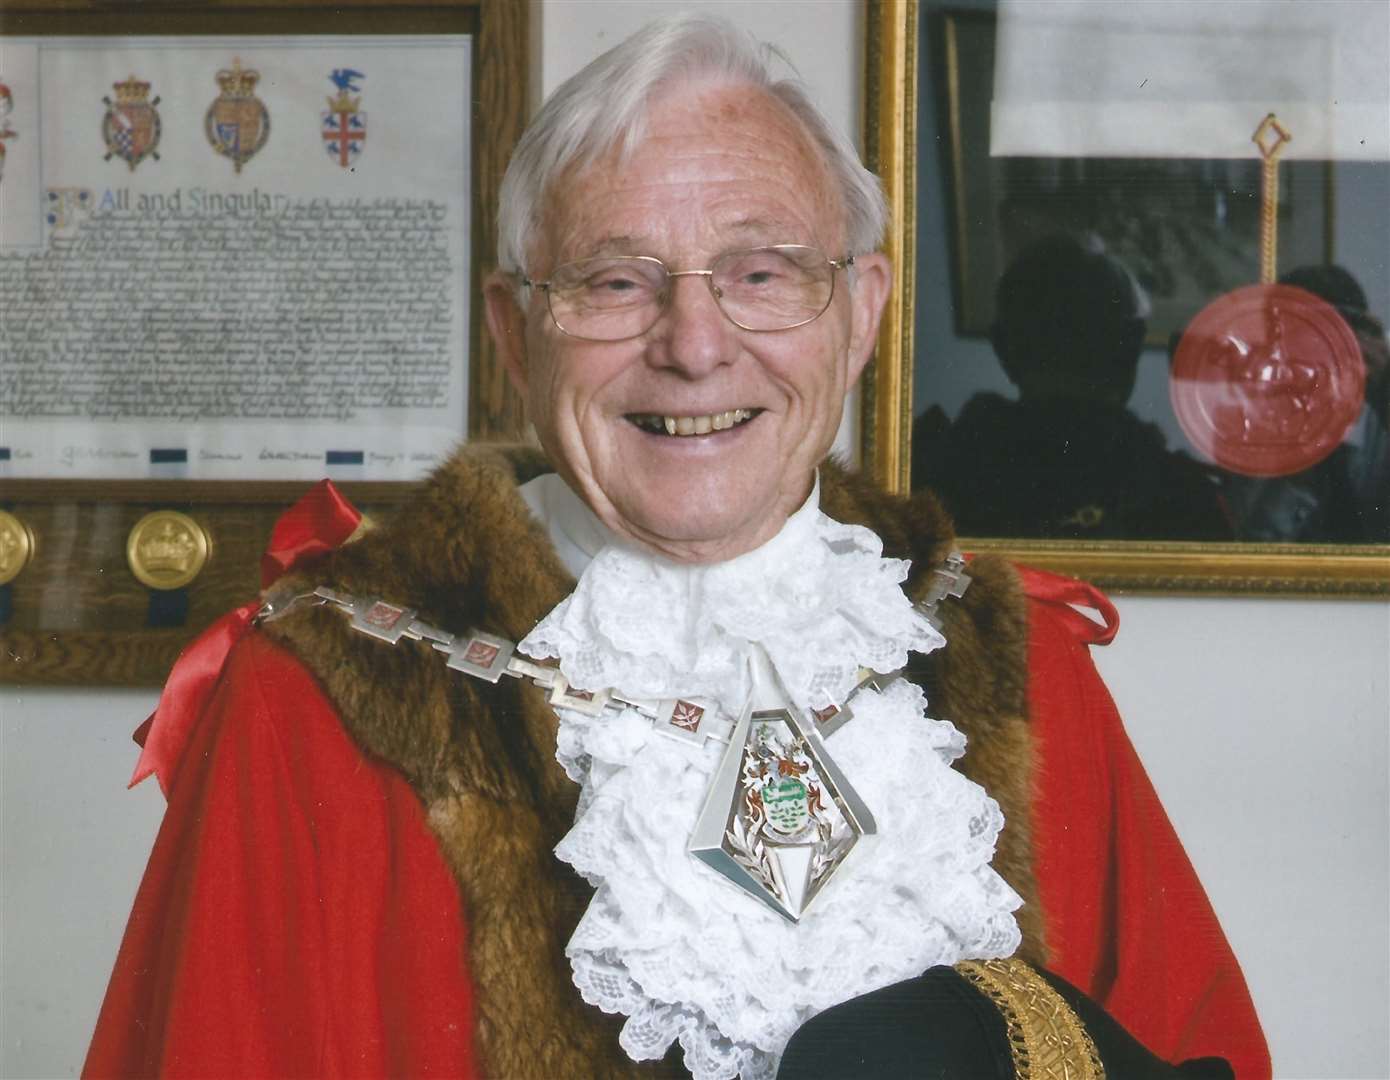 John Holland was Mayor of Ashford from 2009-2010